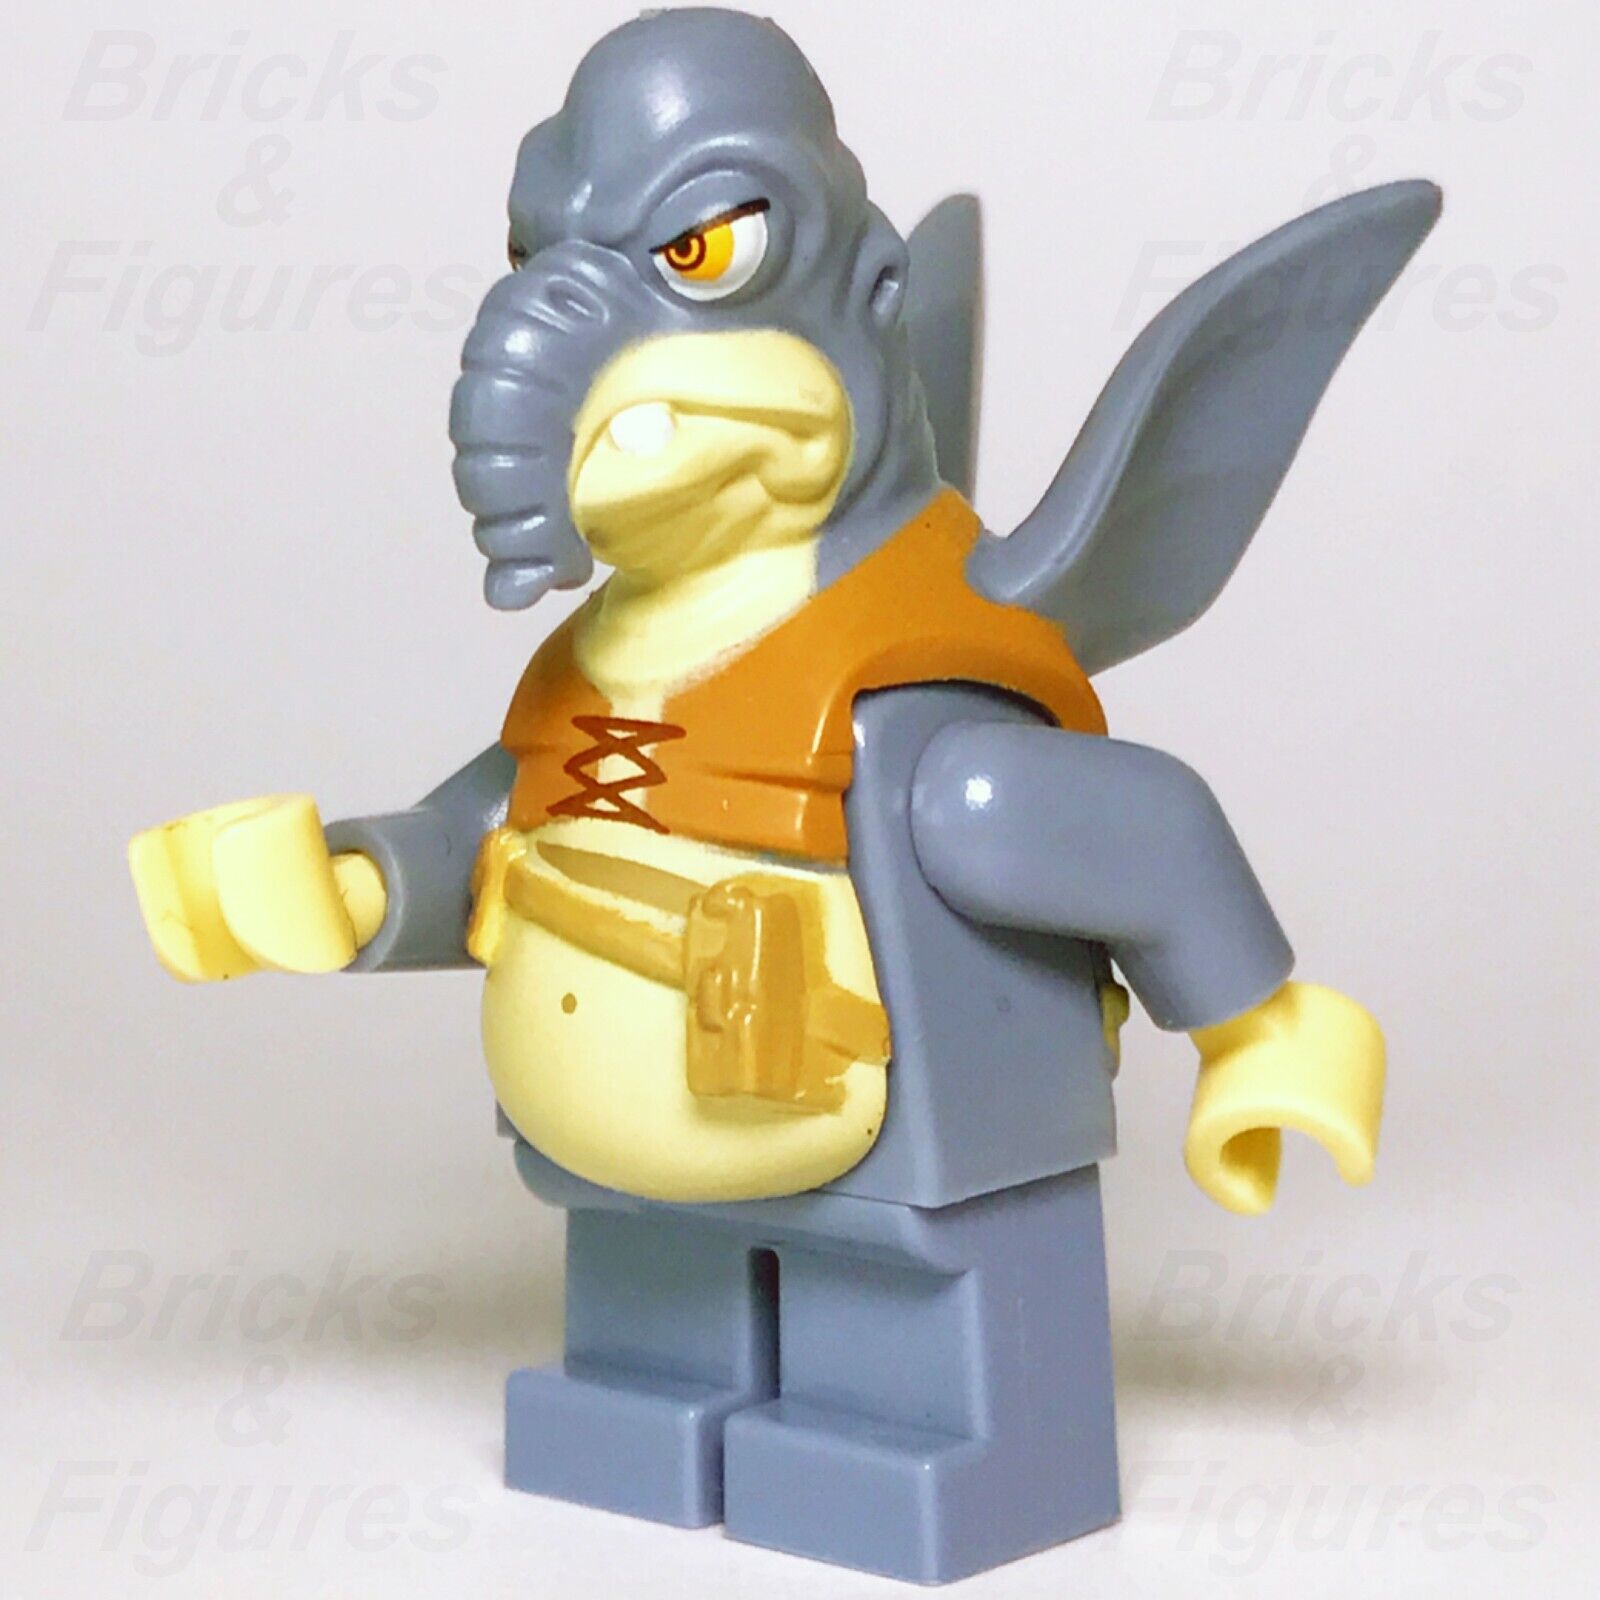 LEGO Star Wars Watto Minifigure Toydarian Junk Dealer 75096 sw0649 Episode 1 - Bricks & Figures